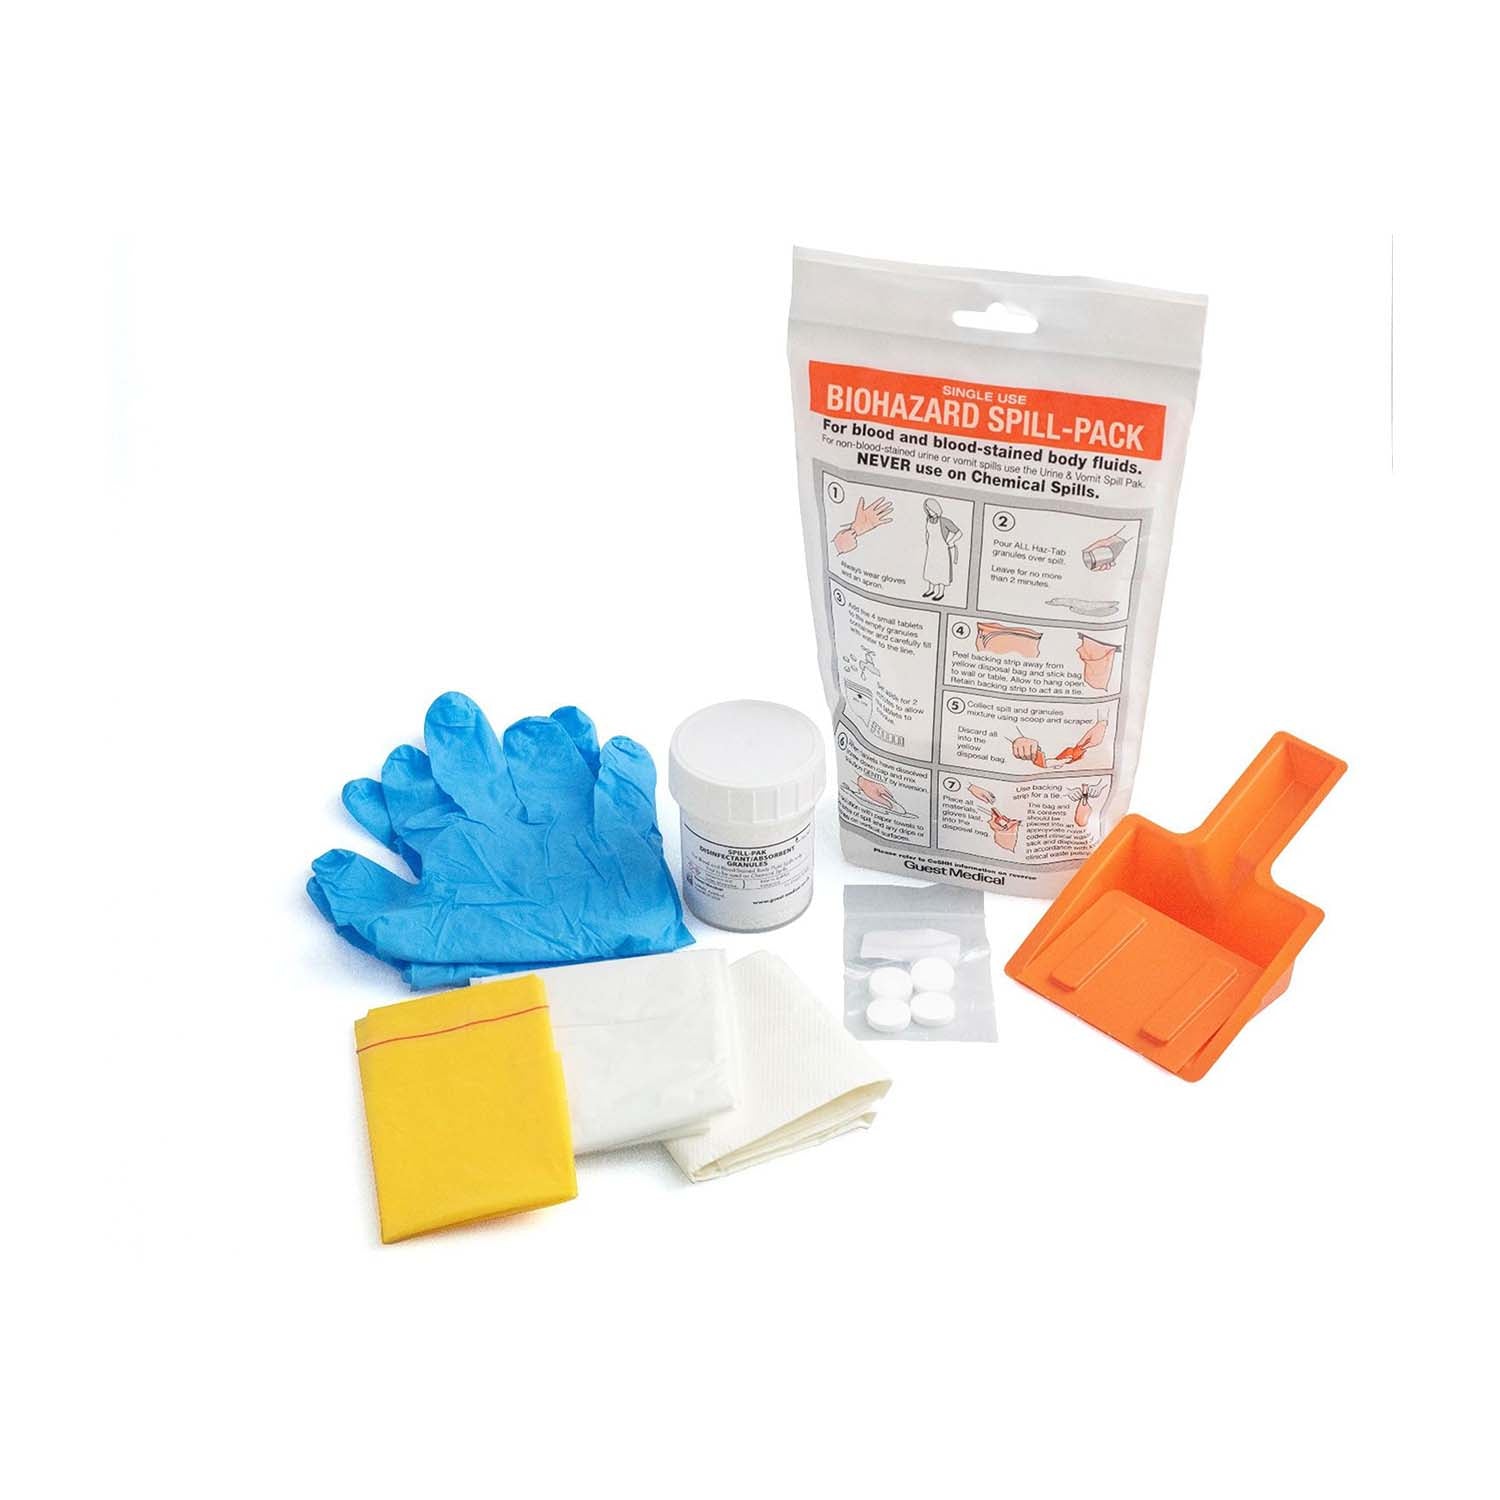 5 Urine and Vomit & 5 Biohazard Spill Packs | Single Pack